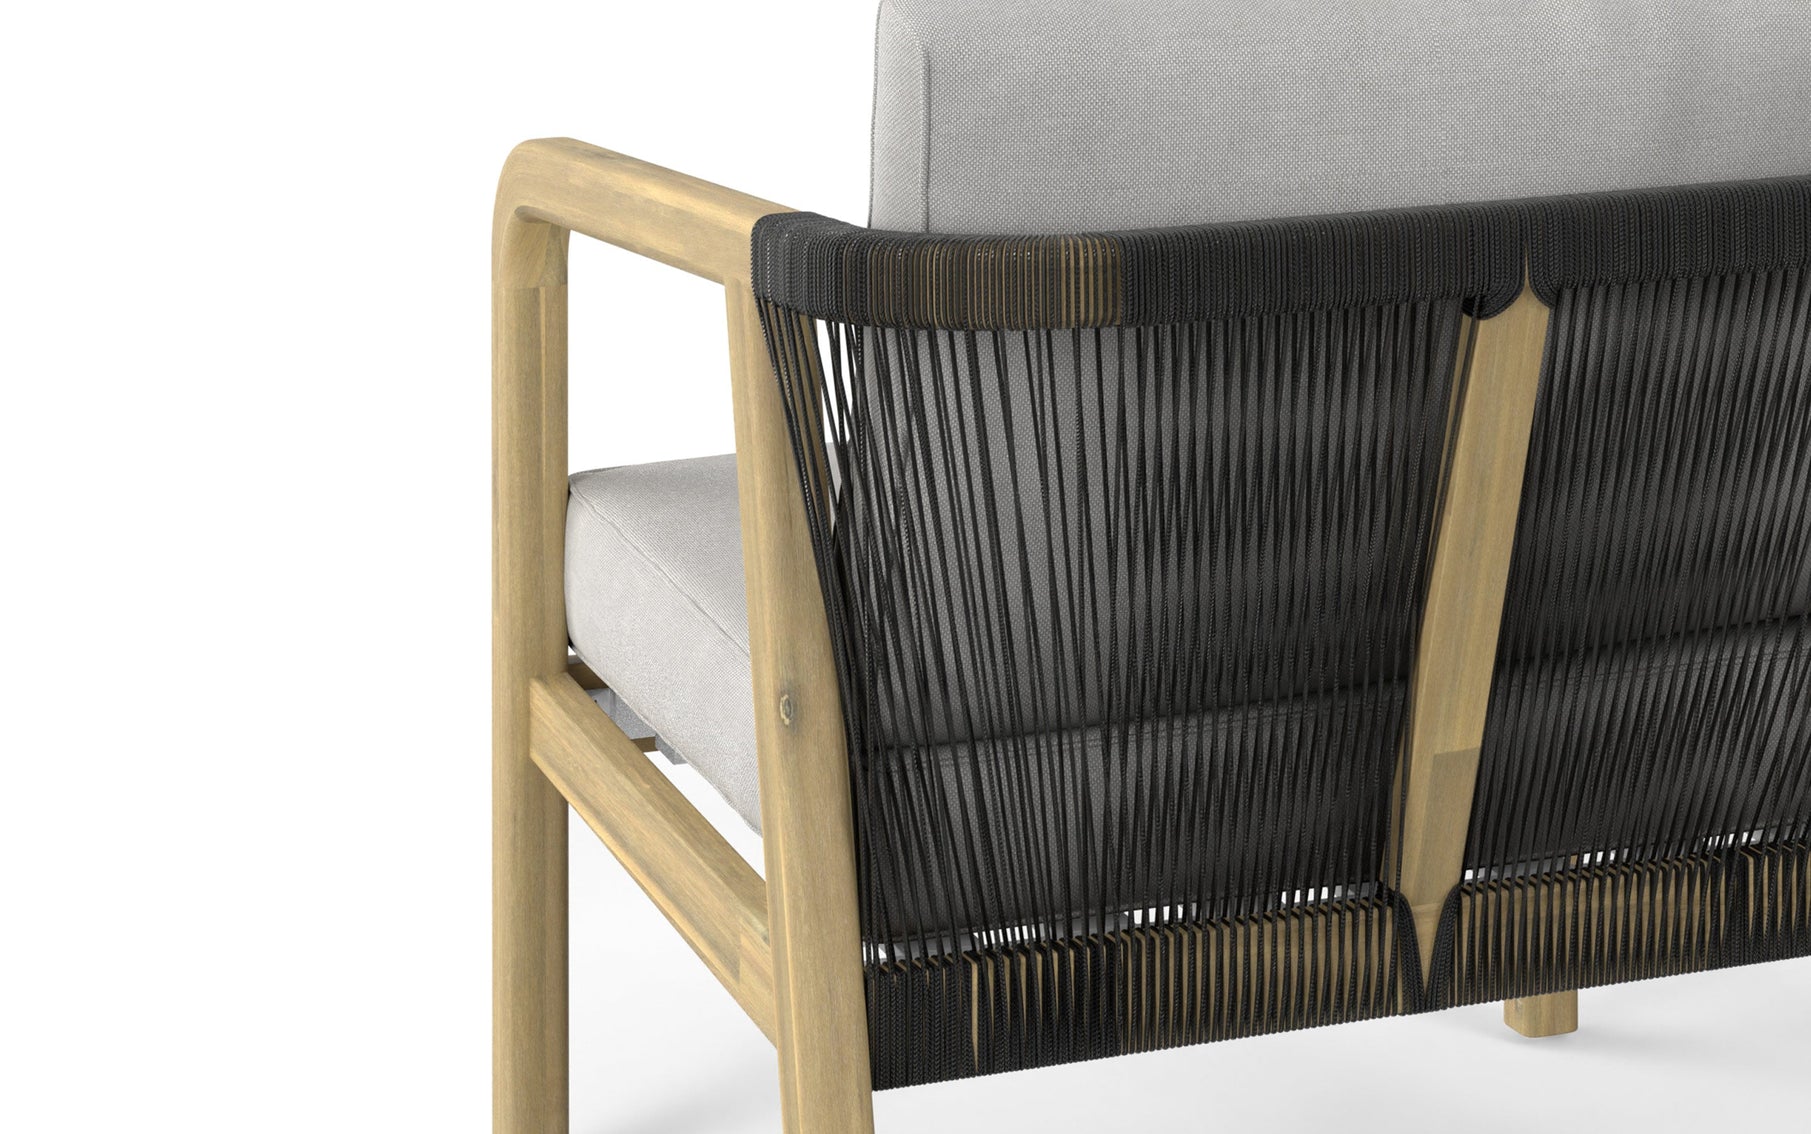 Palmetto Outdoor Conversation Chair (Set of 2)